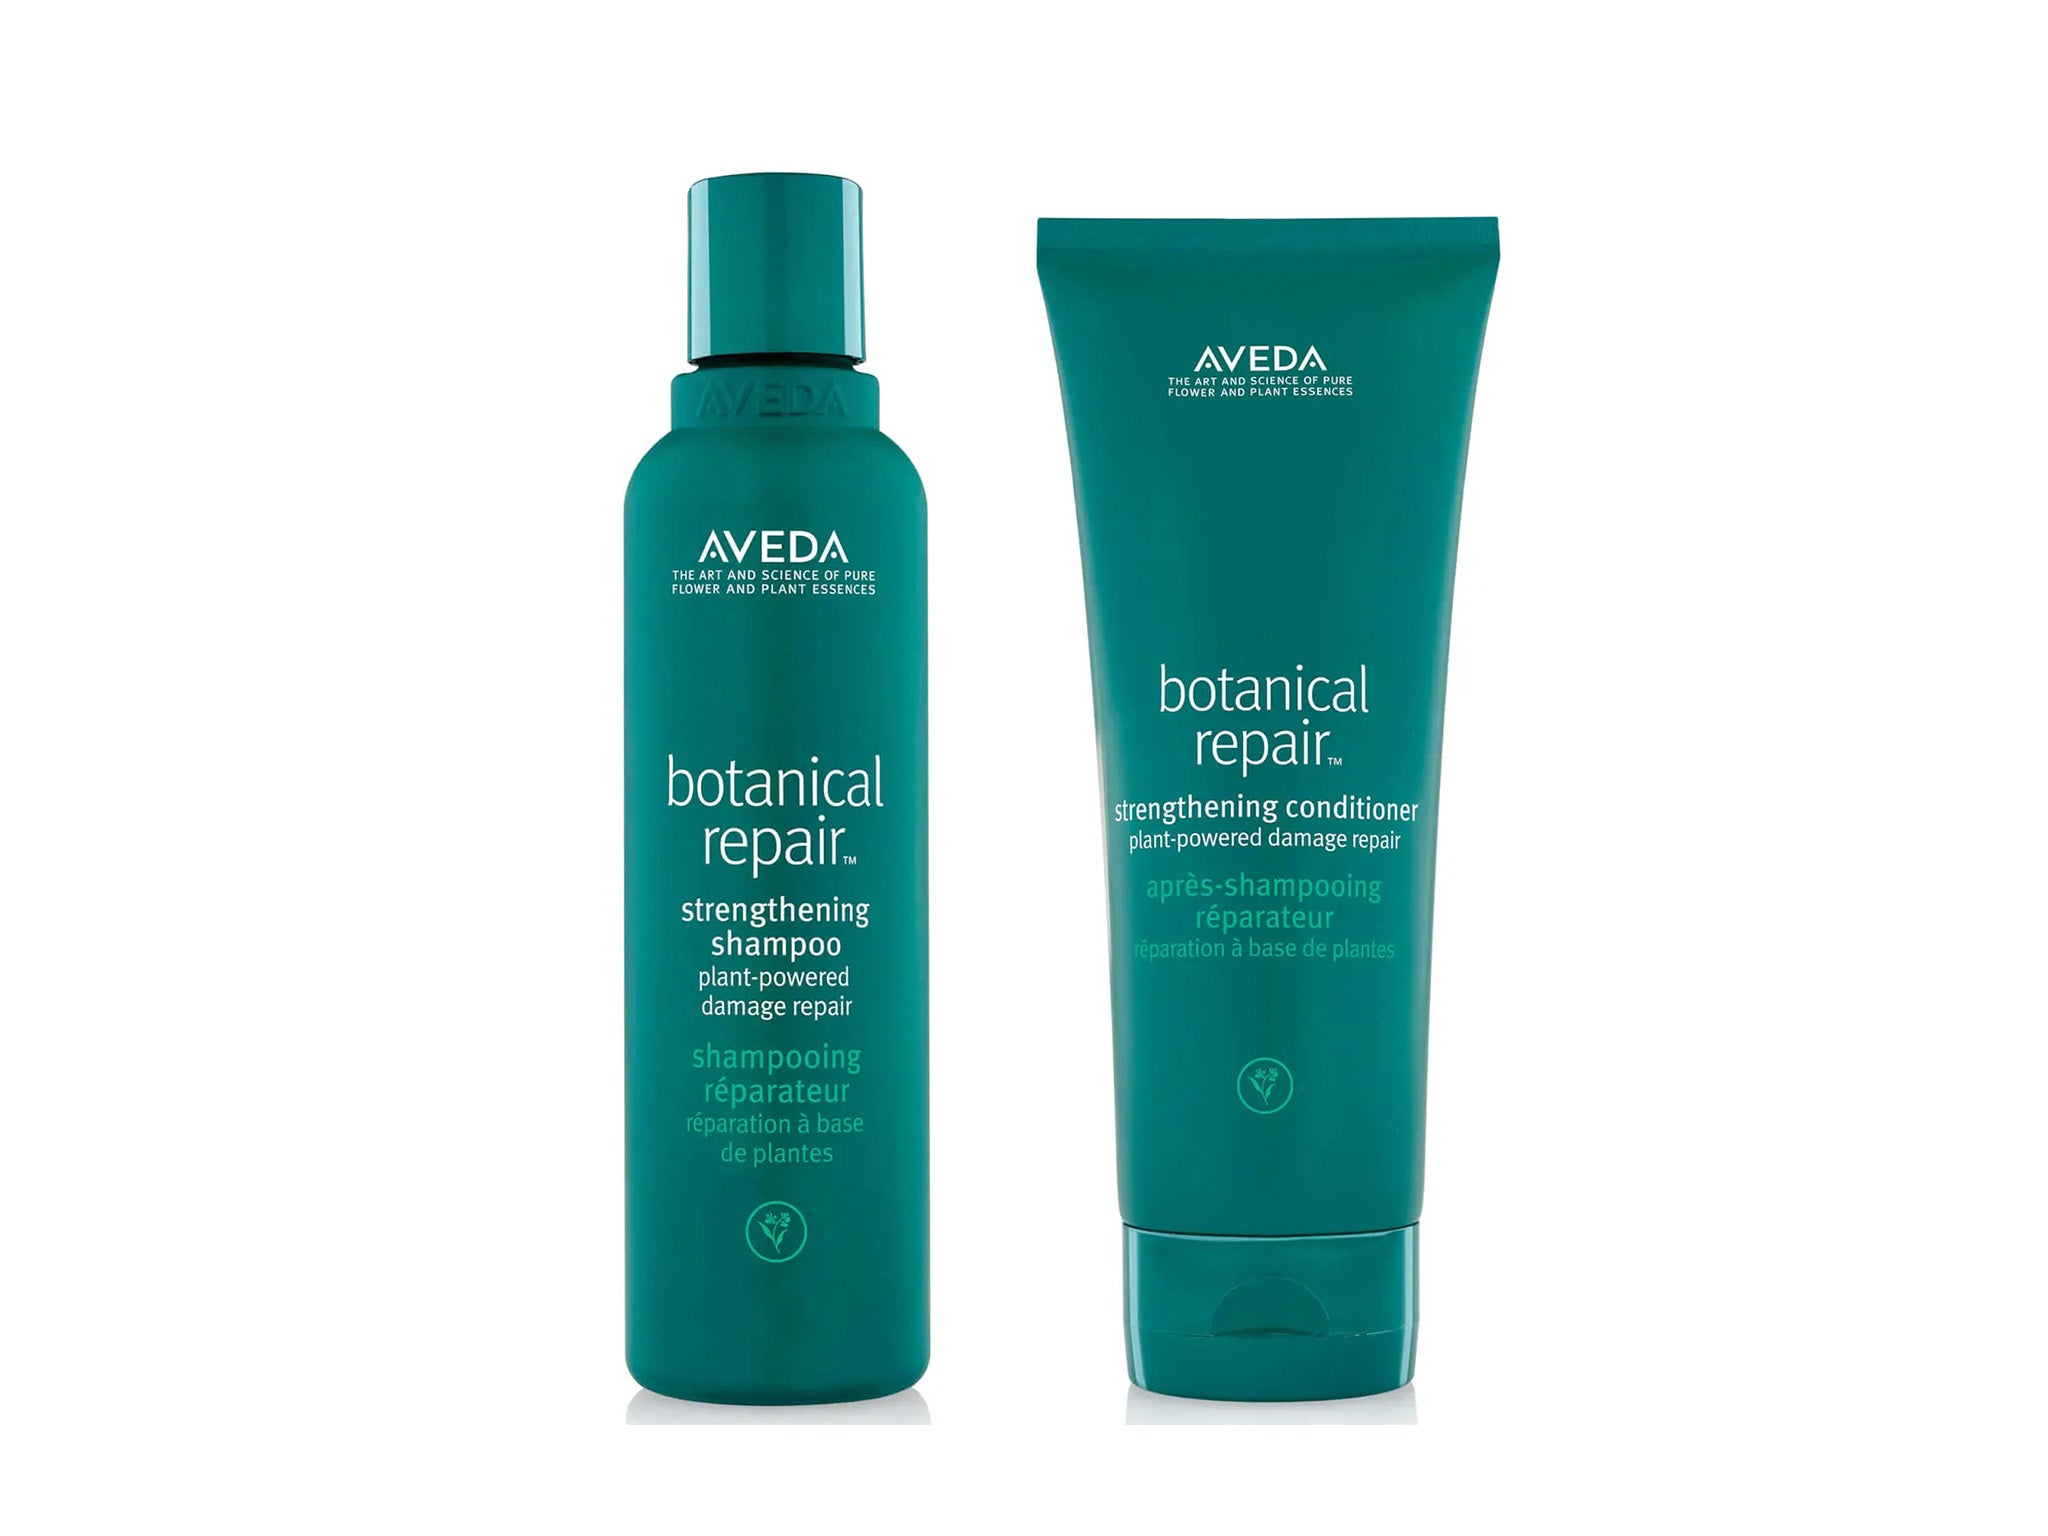 Aveda botanical repair strengthening shampoo and conditioner